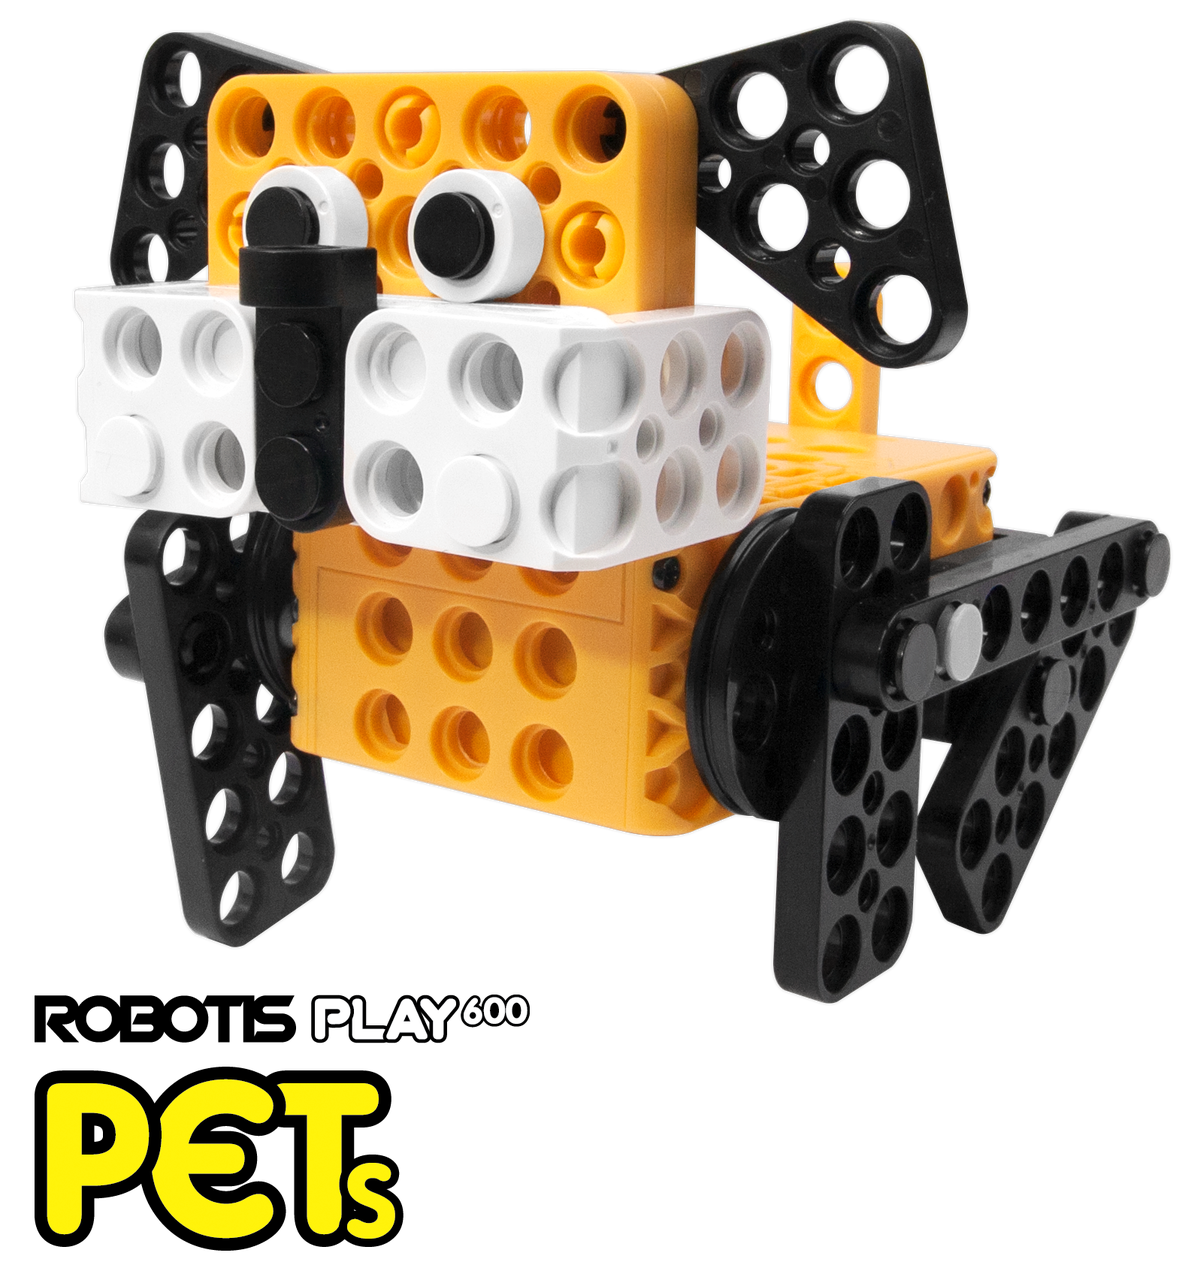 PLAY 600 PETs Motorized Robotics Toy 